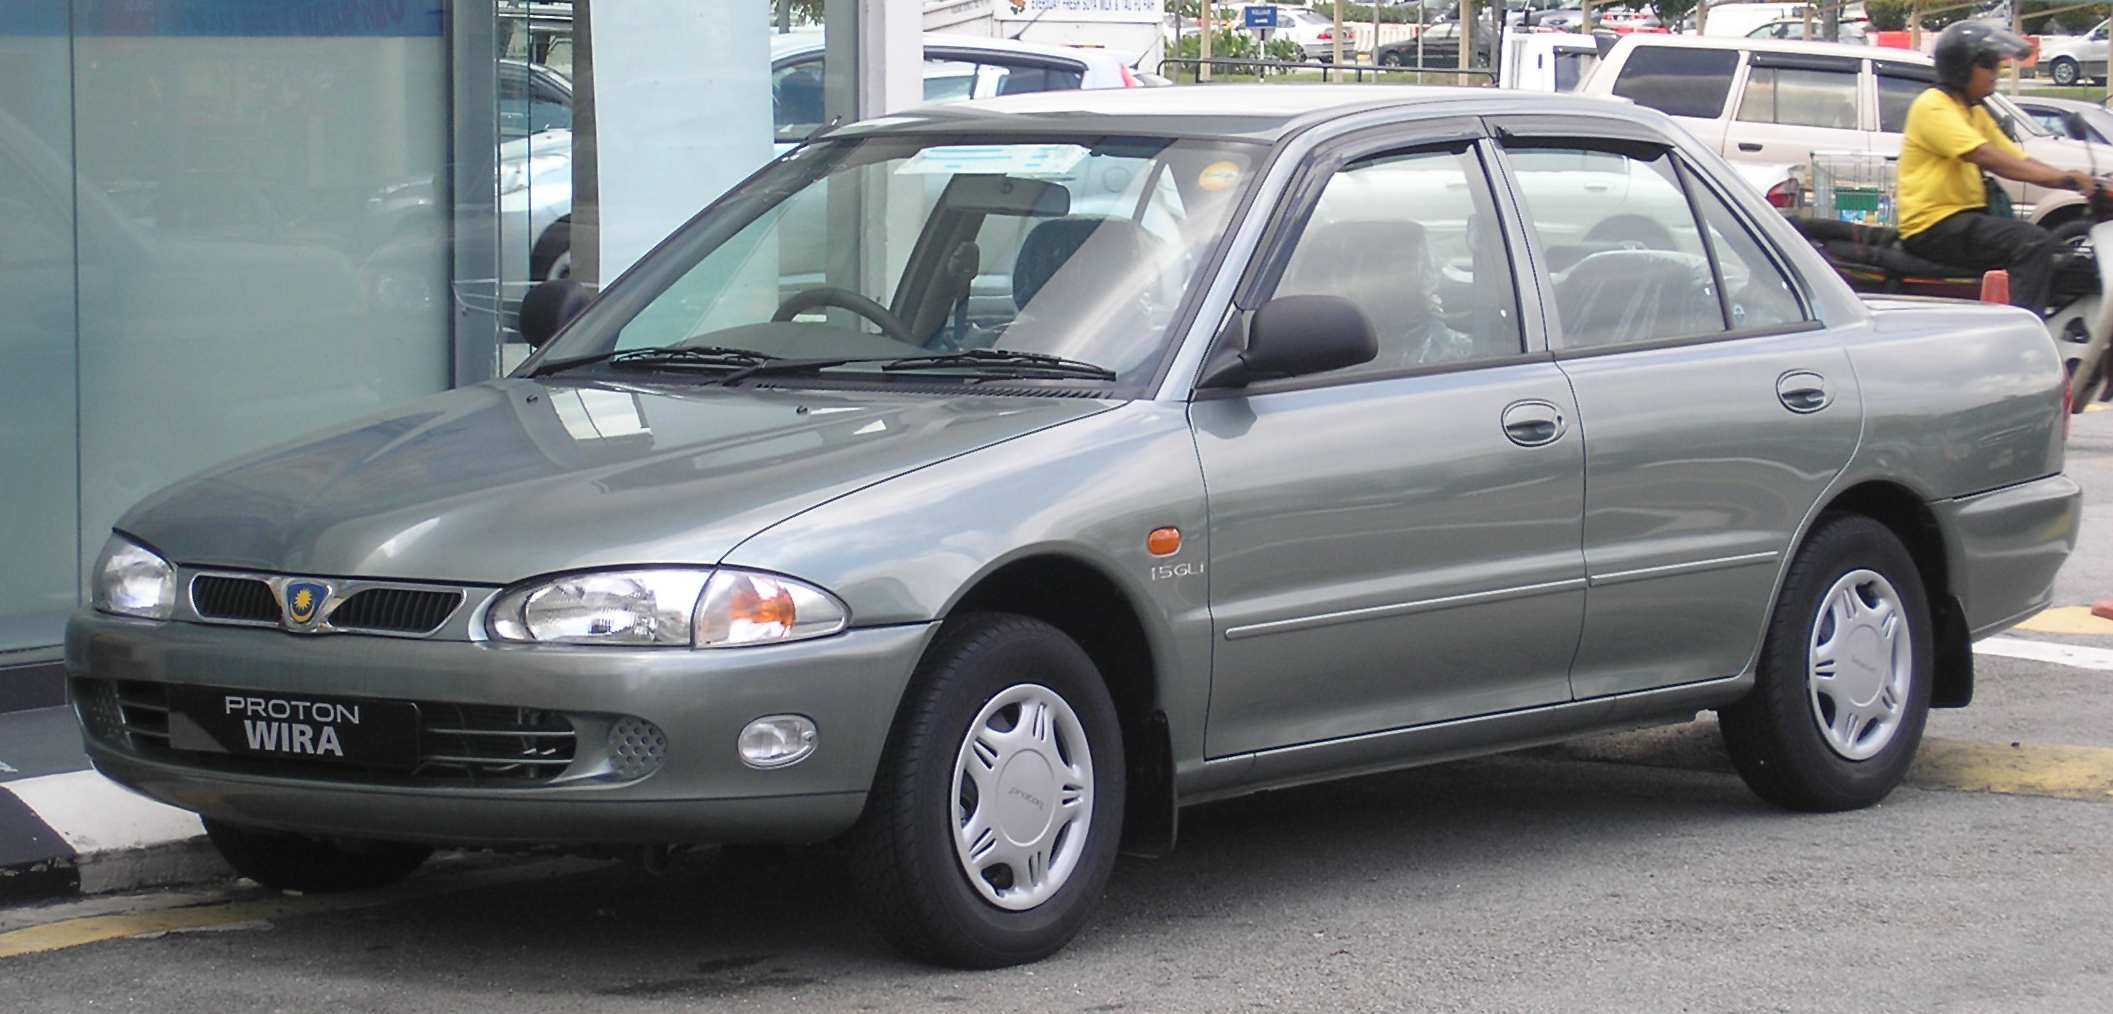 Best Selling Cars â€“ Matt's blog Â» Malaysia 2000-2003: Proton Wira ...